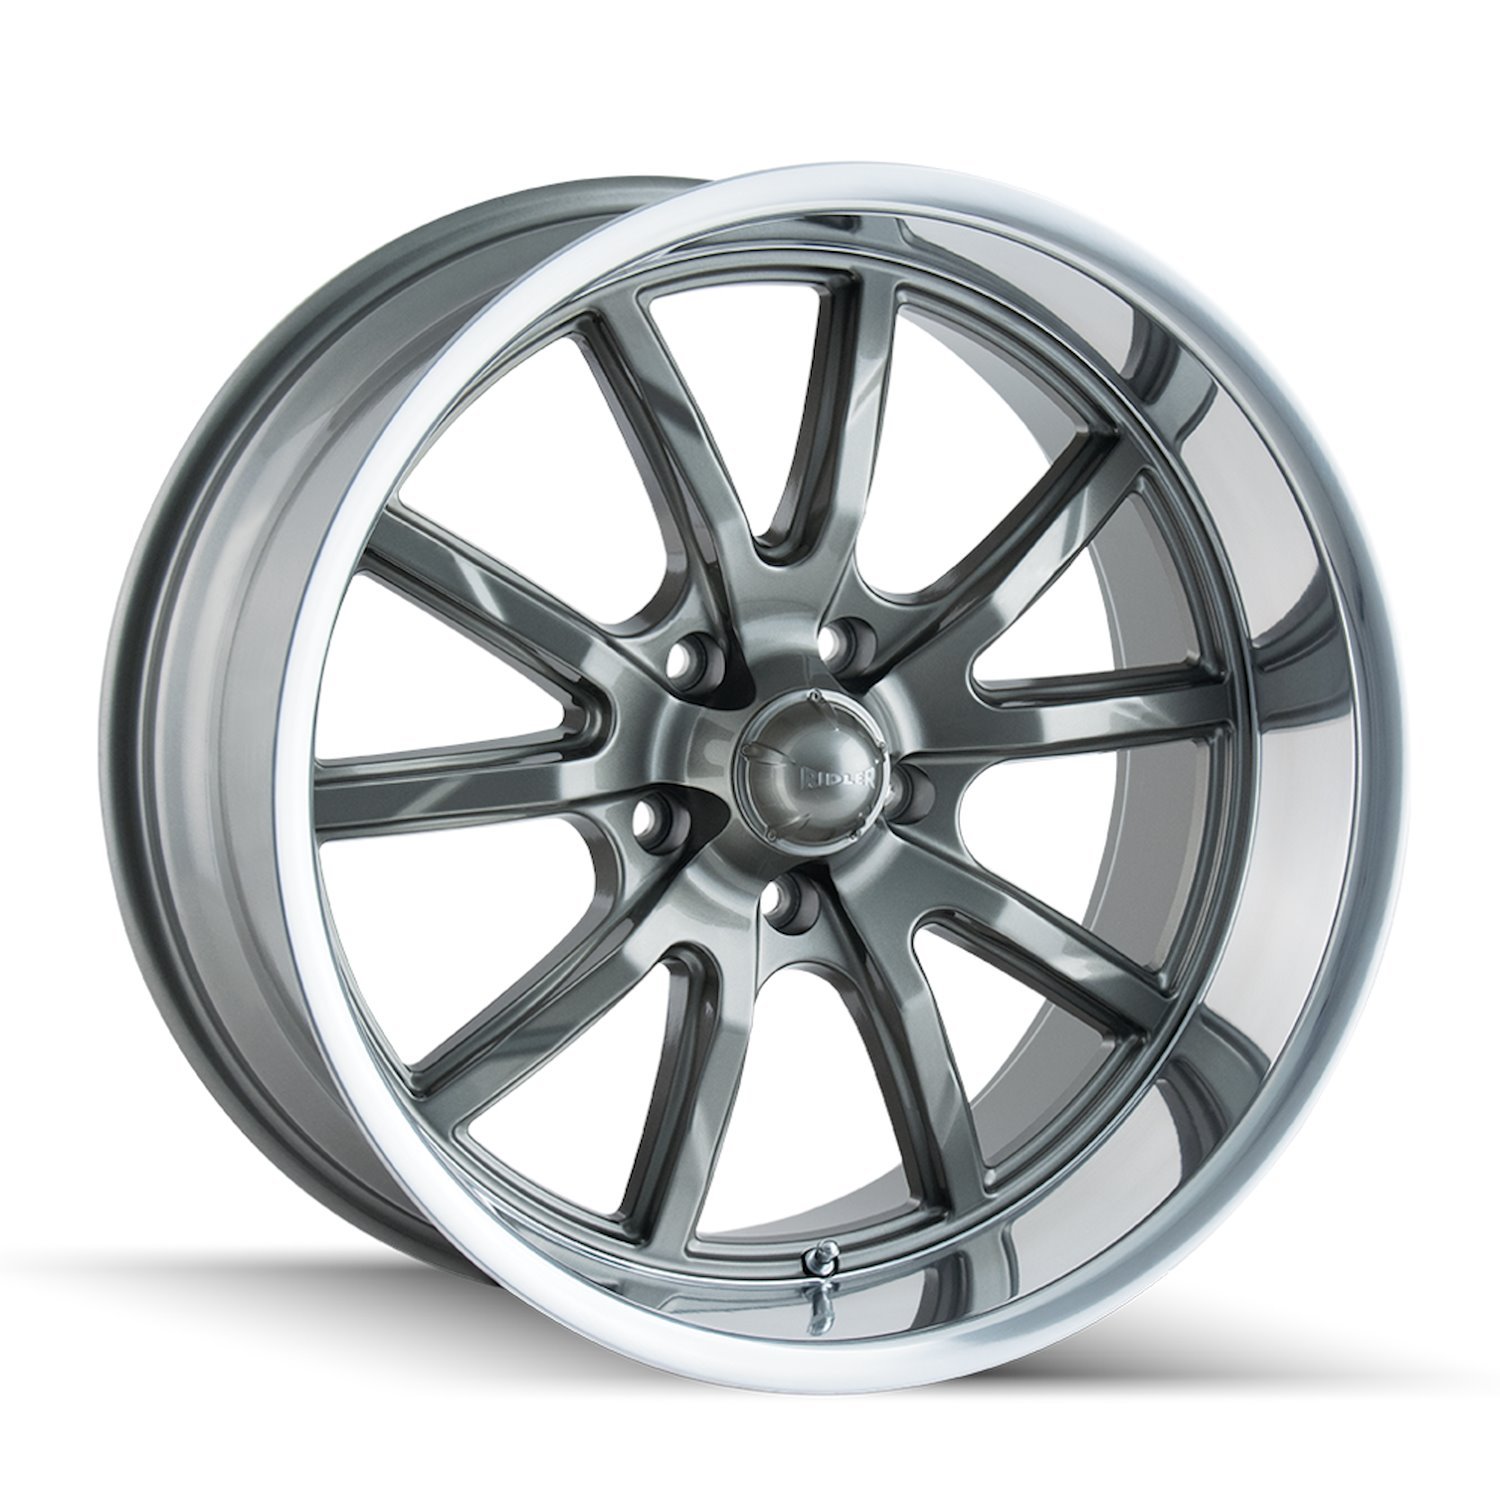 650-7761G 650-Series Wheel [Size: 17" x 7"] Gloss Grey Polished Finish